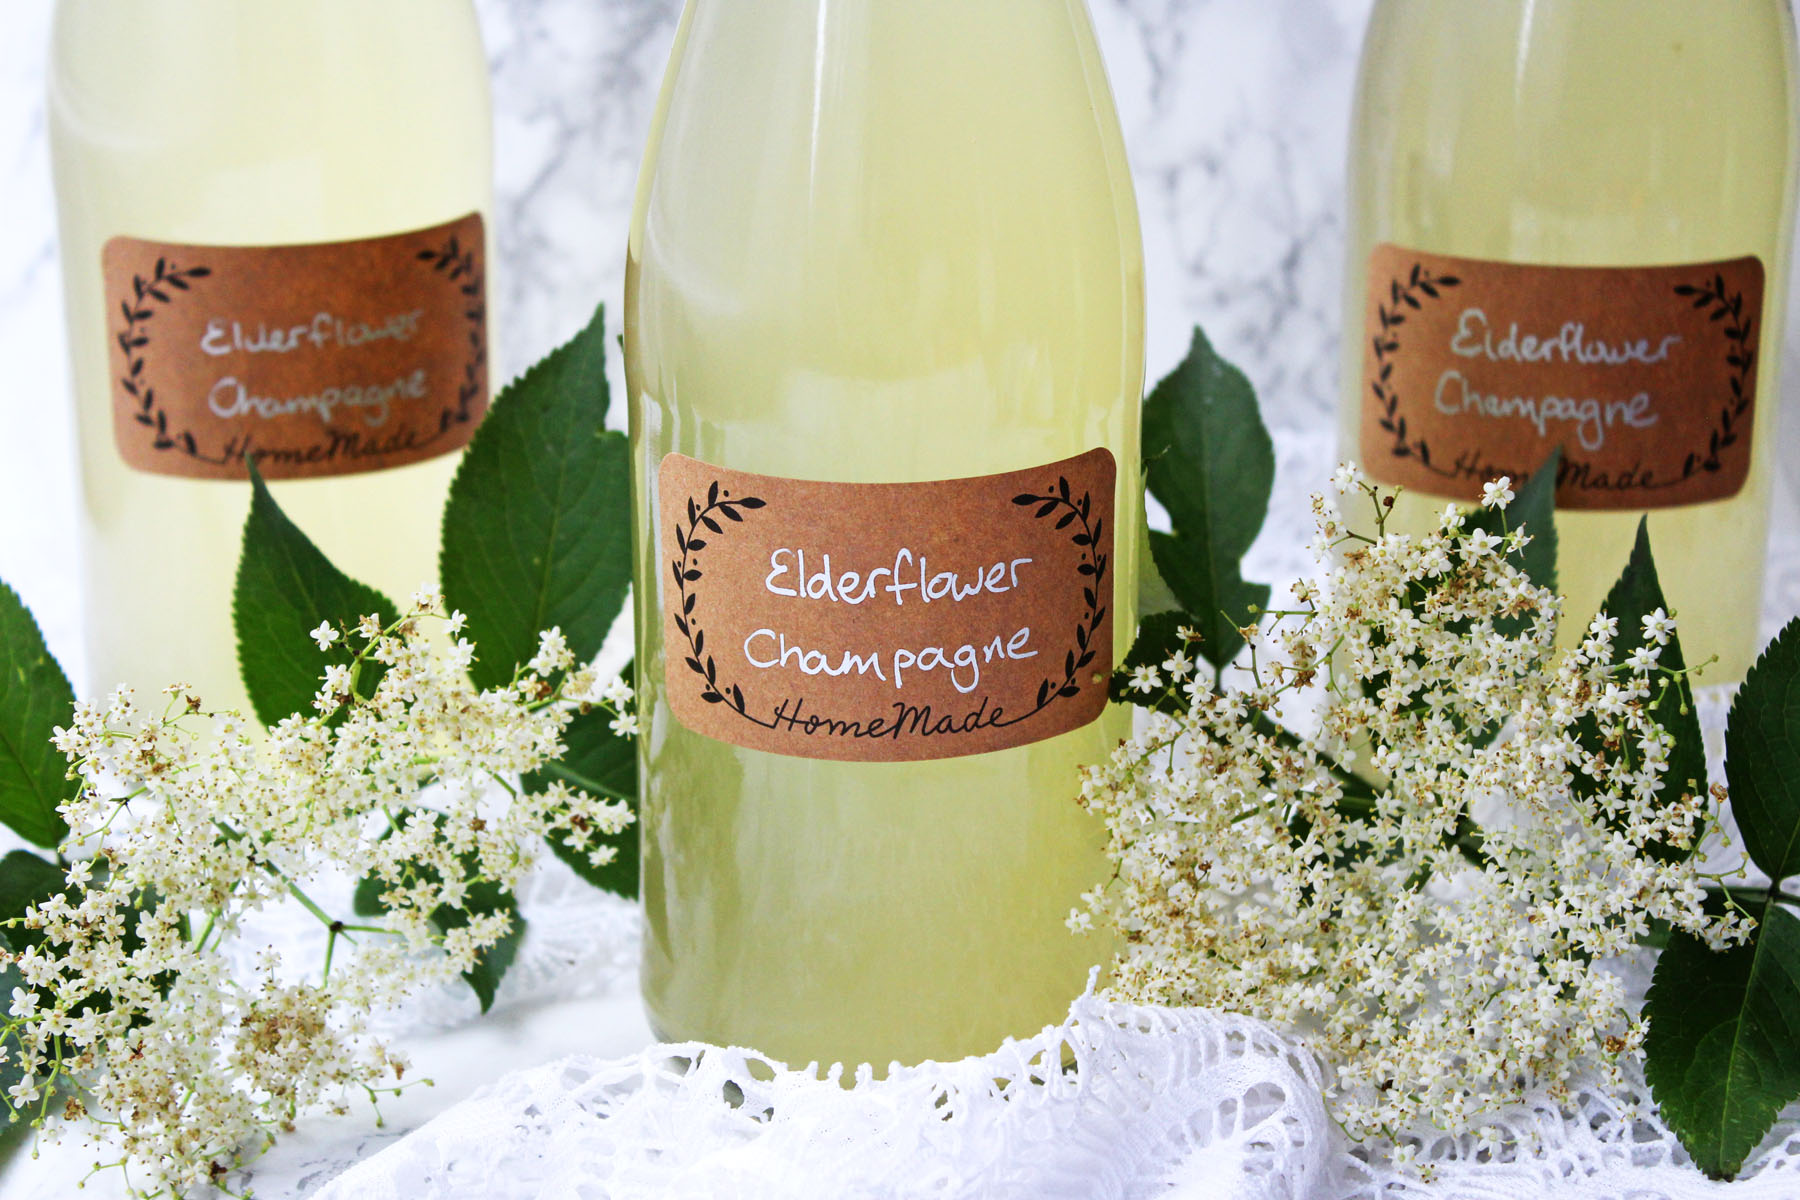 Elderflower Champagne